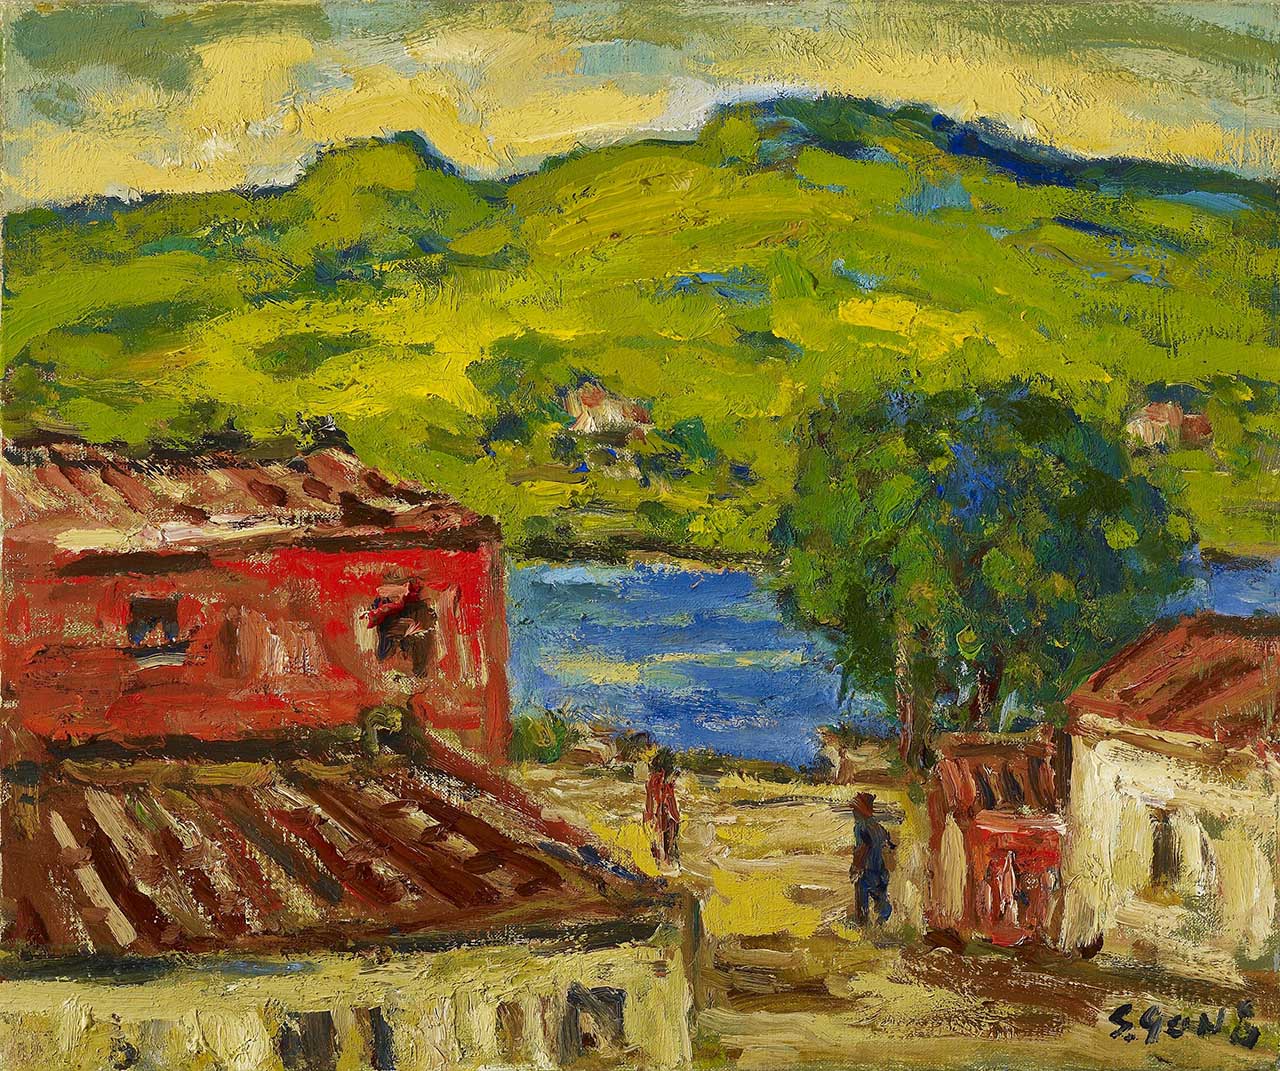 Tamkang Oil on canvas 38x45 cm